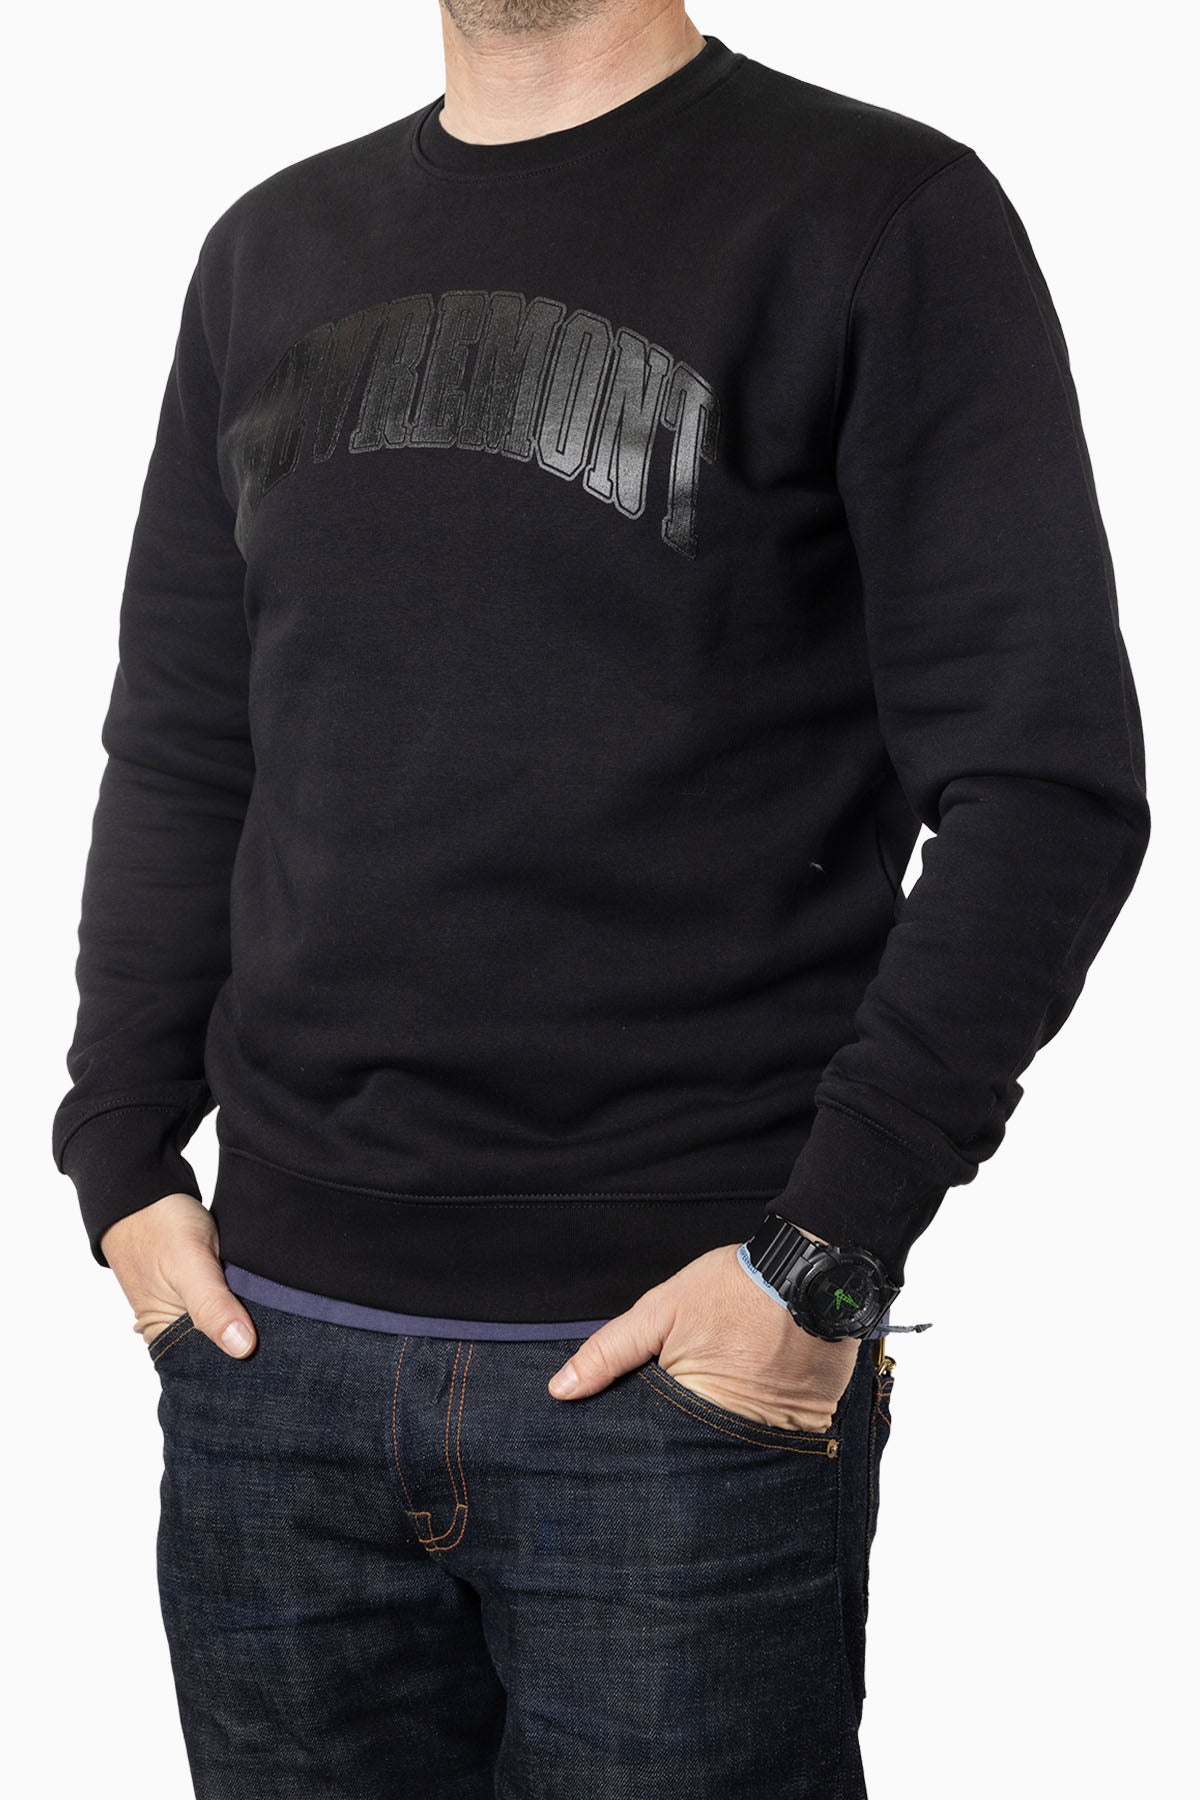 Sweater Chevremont black on black Regular Fit